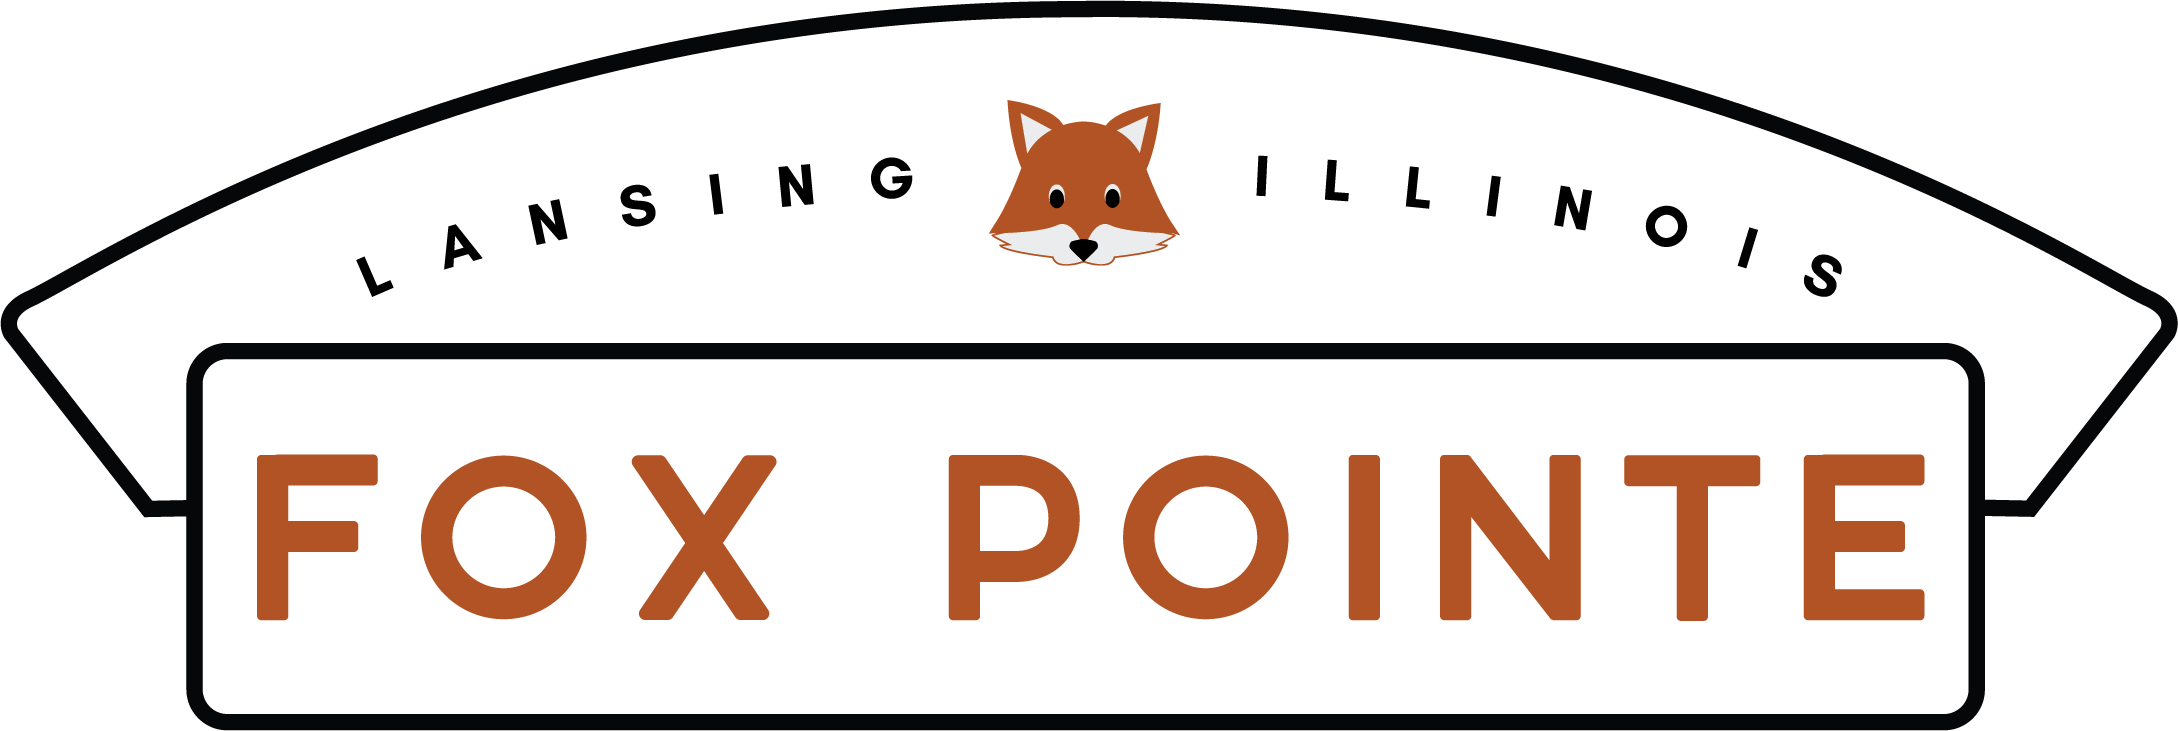 Fox-Pointe-Logo EYES